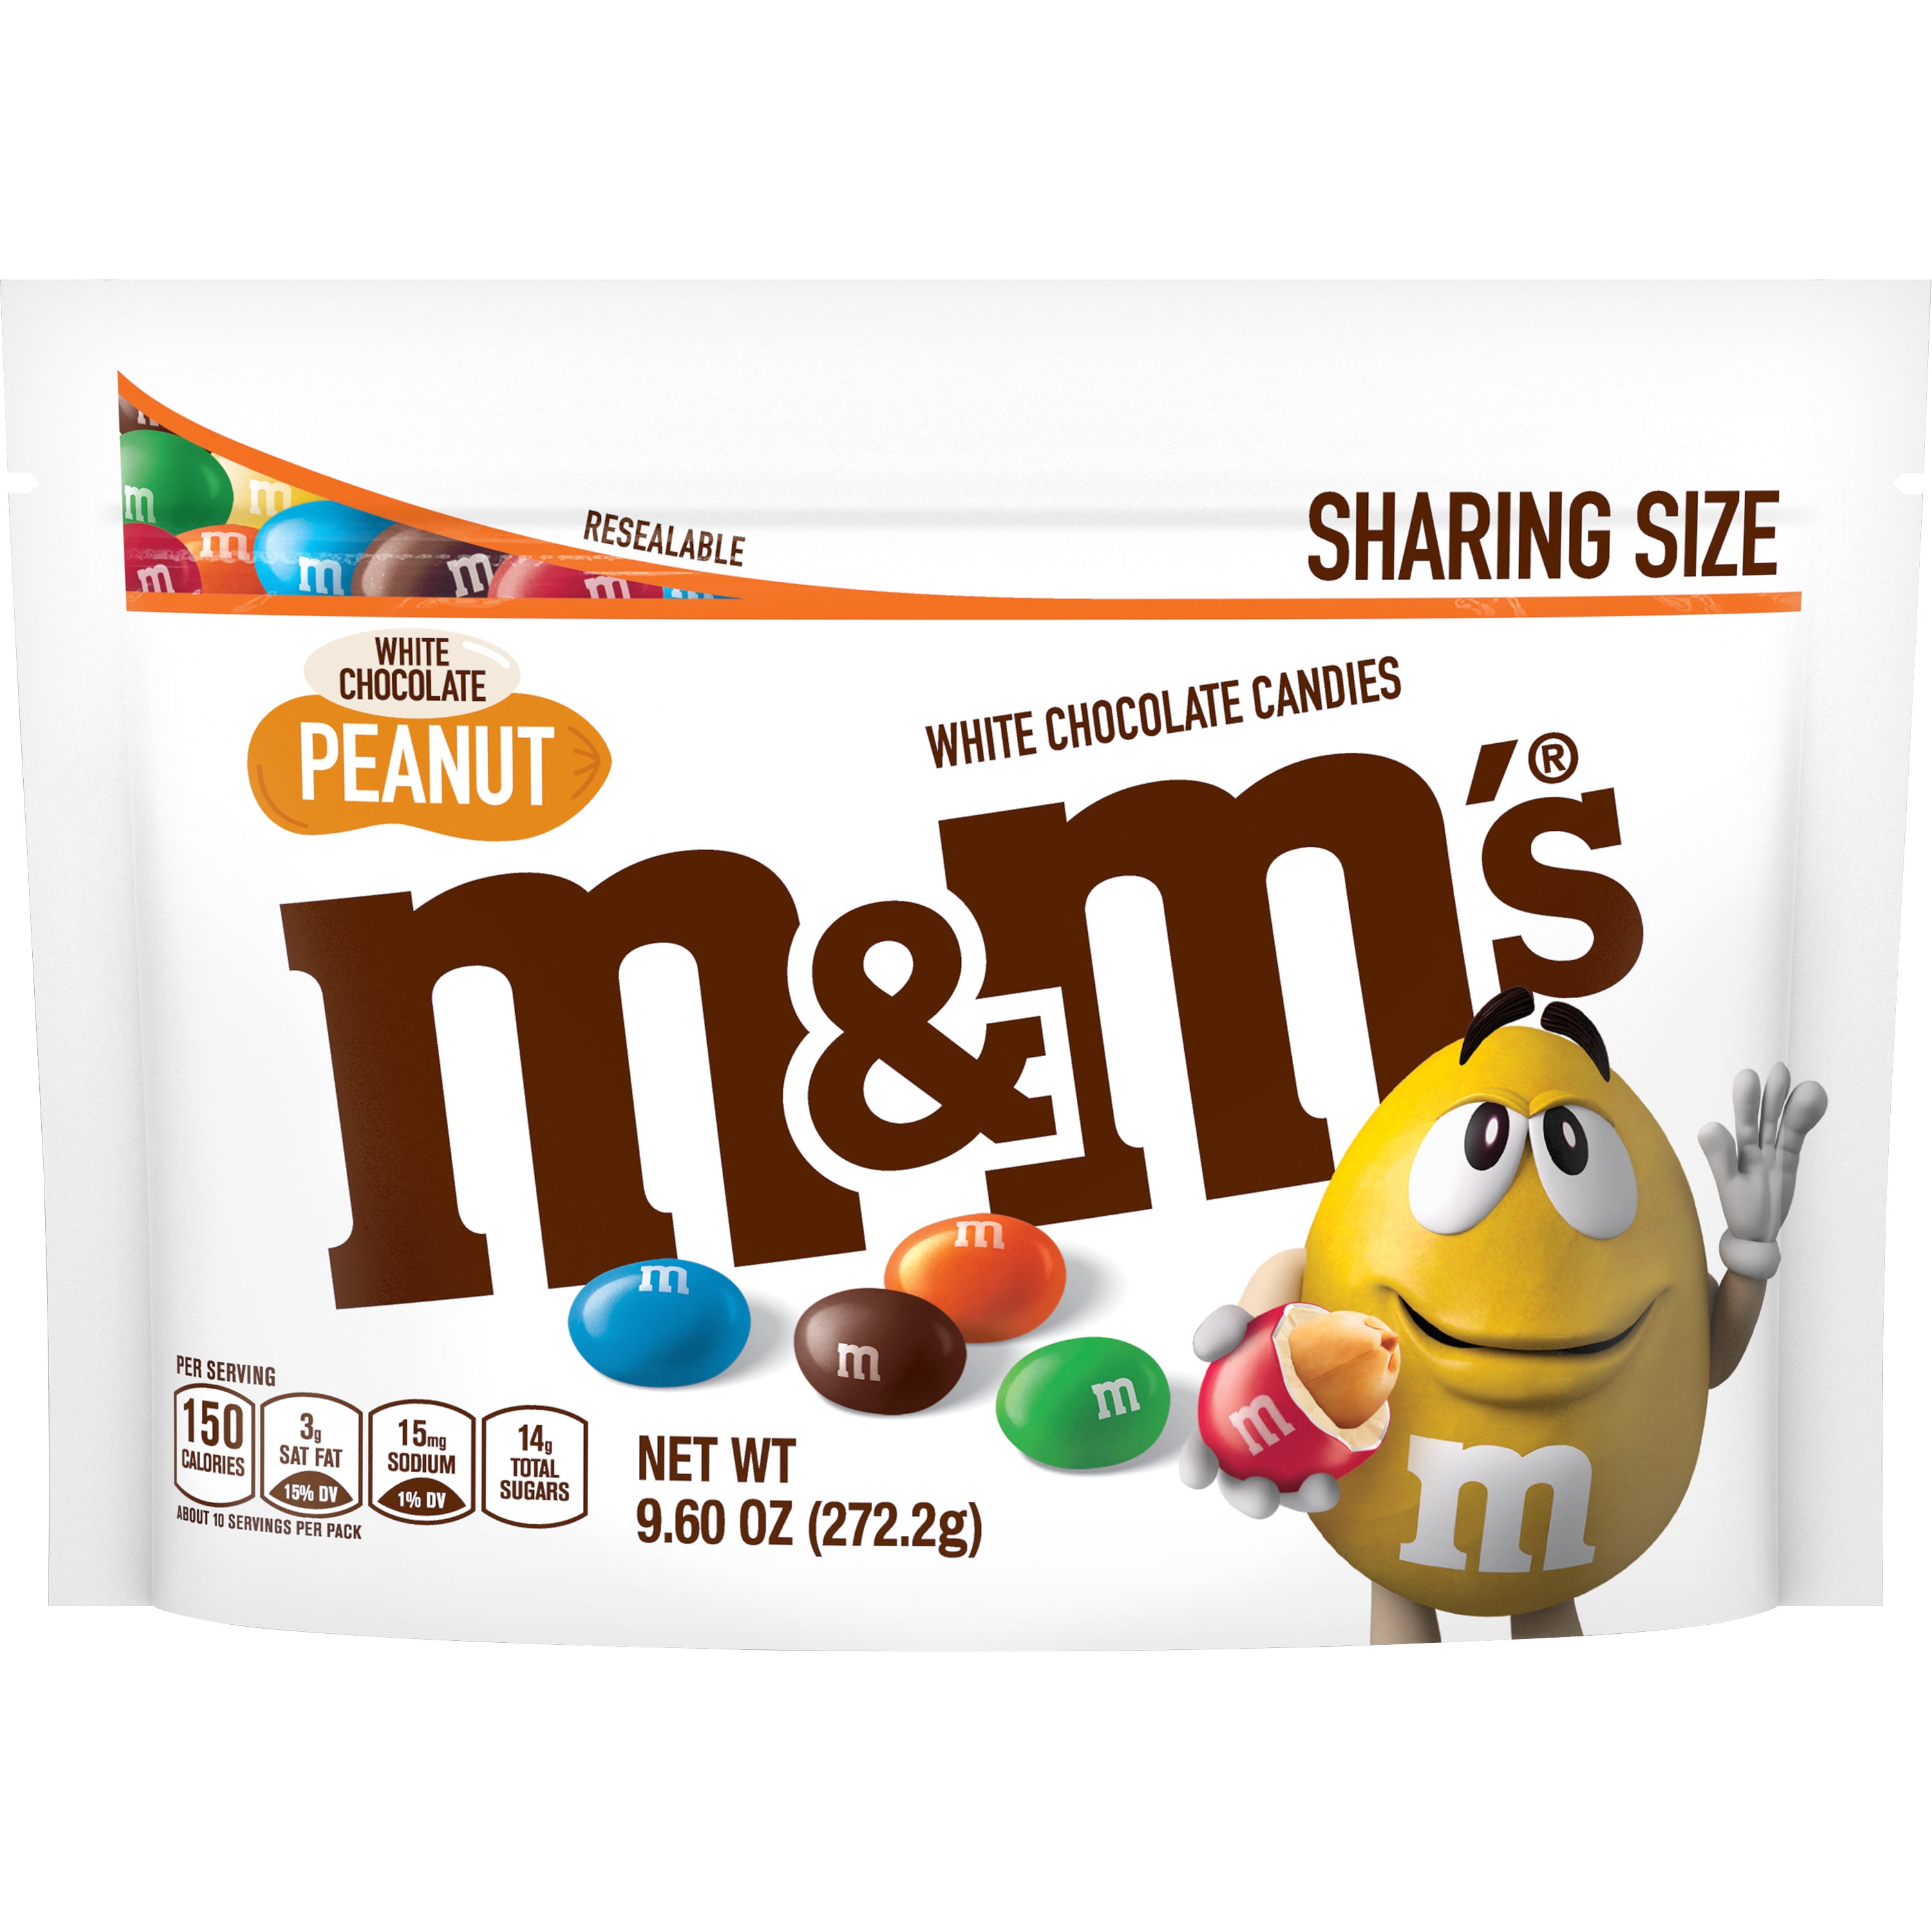 Mandms Peanut White Chocolate Candy Sharing Size 9 6 Oz Bag